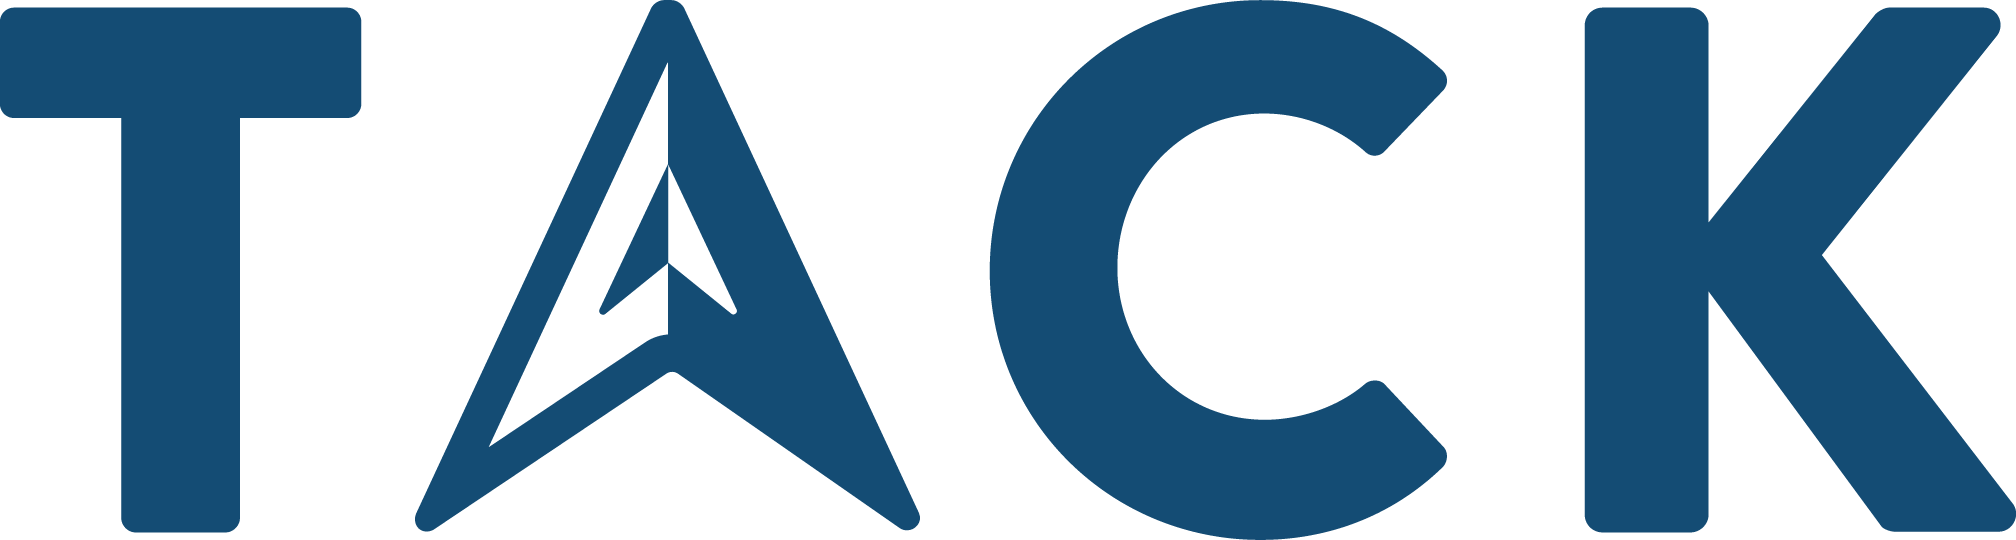 TACK logo